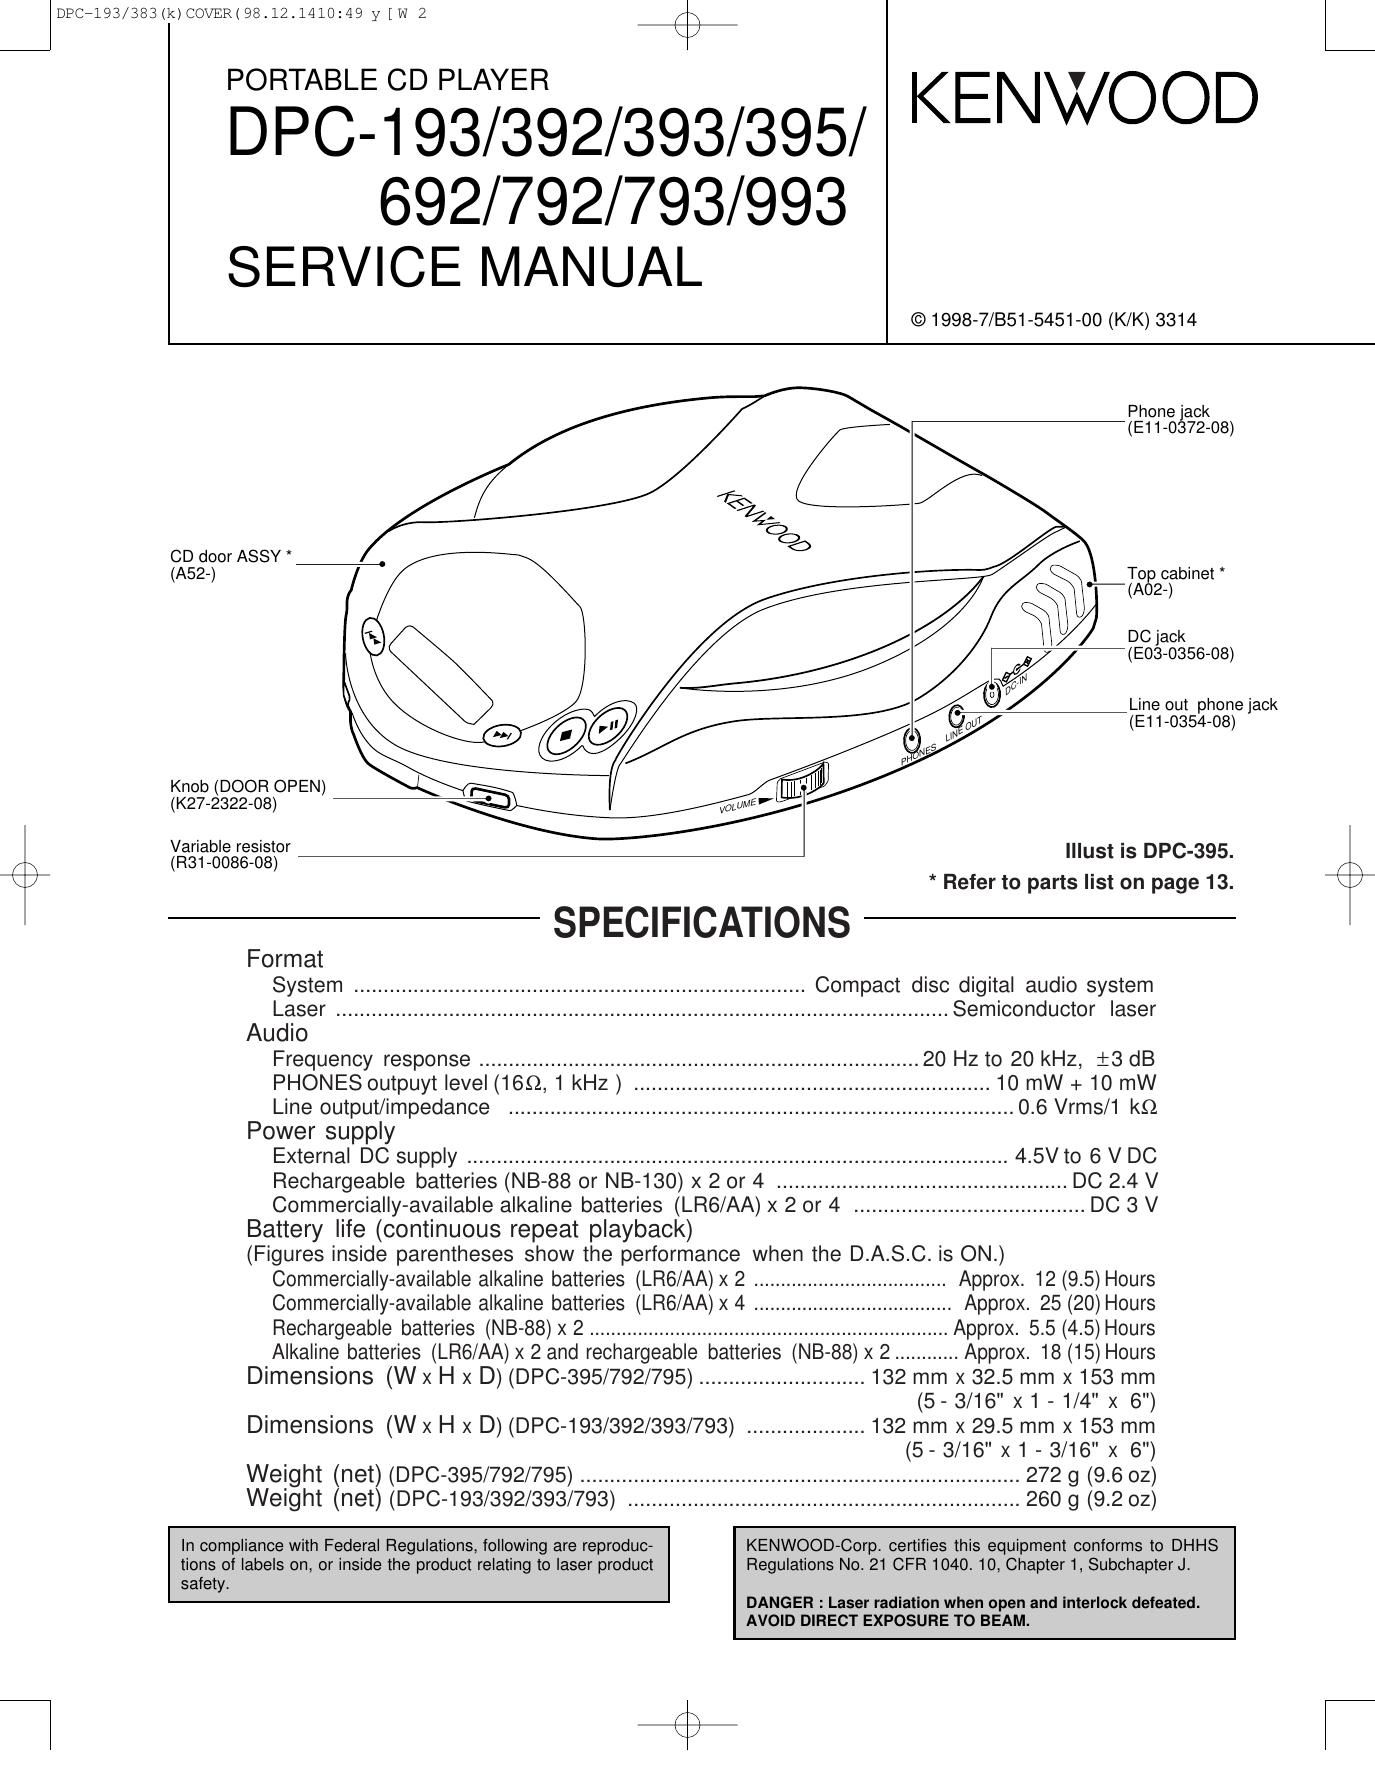 Kenwood DPC 993 Service Manual